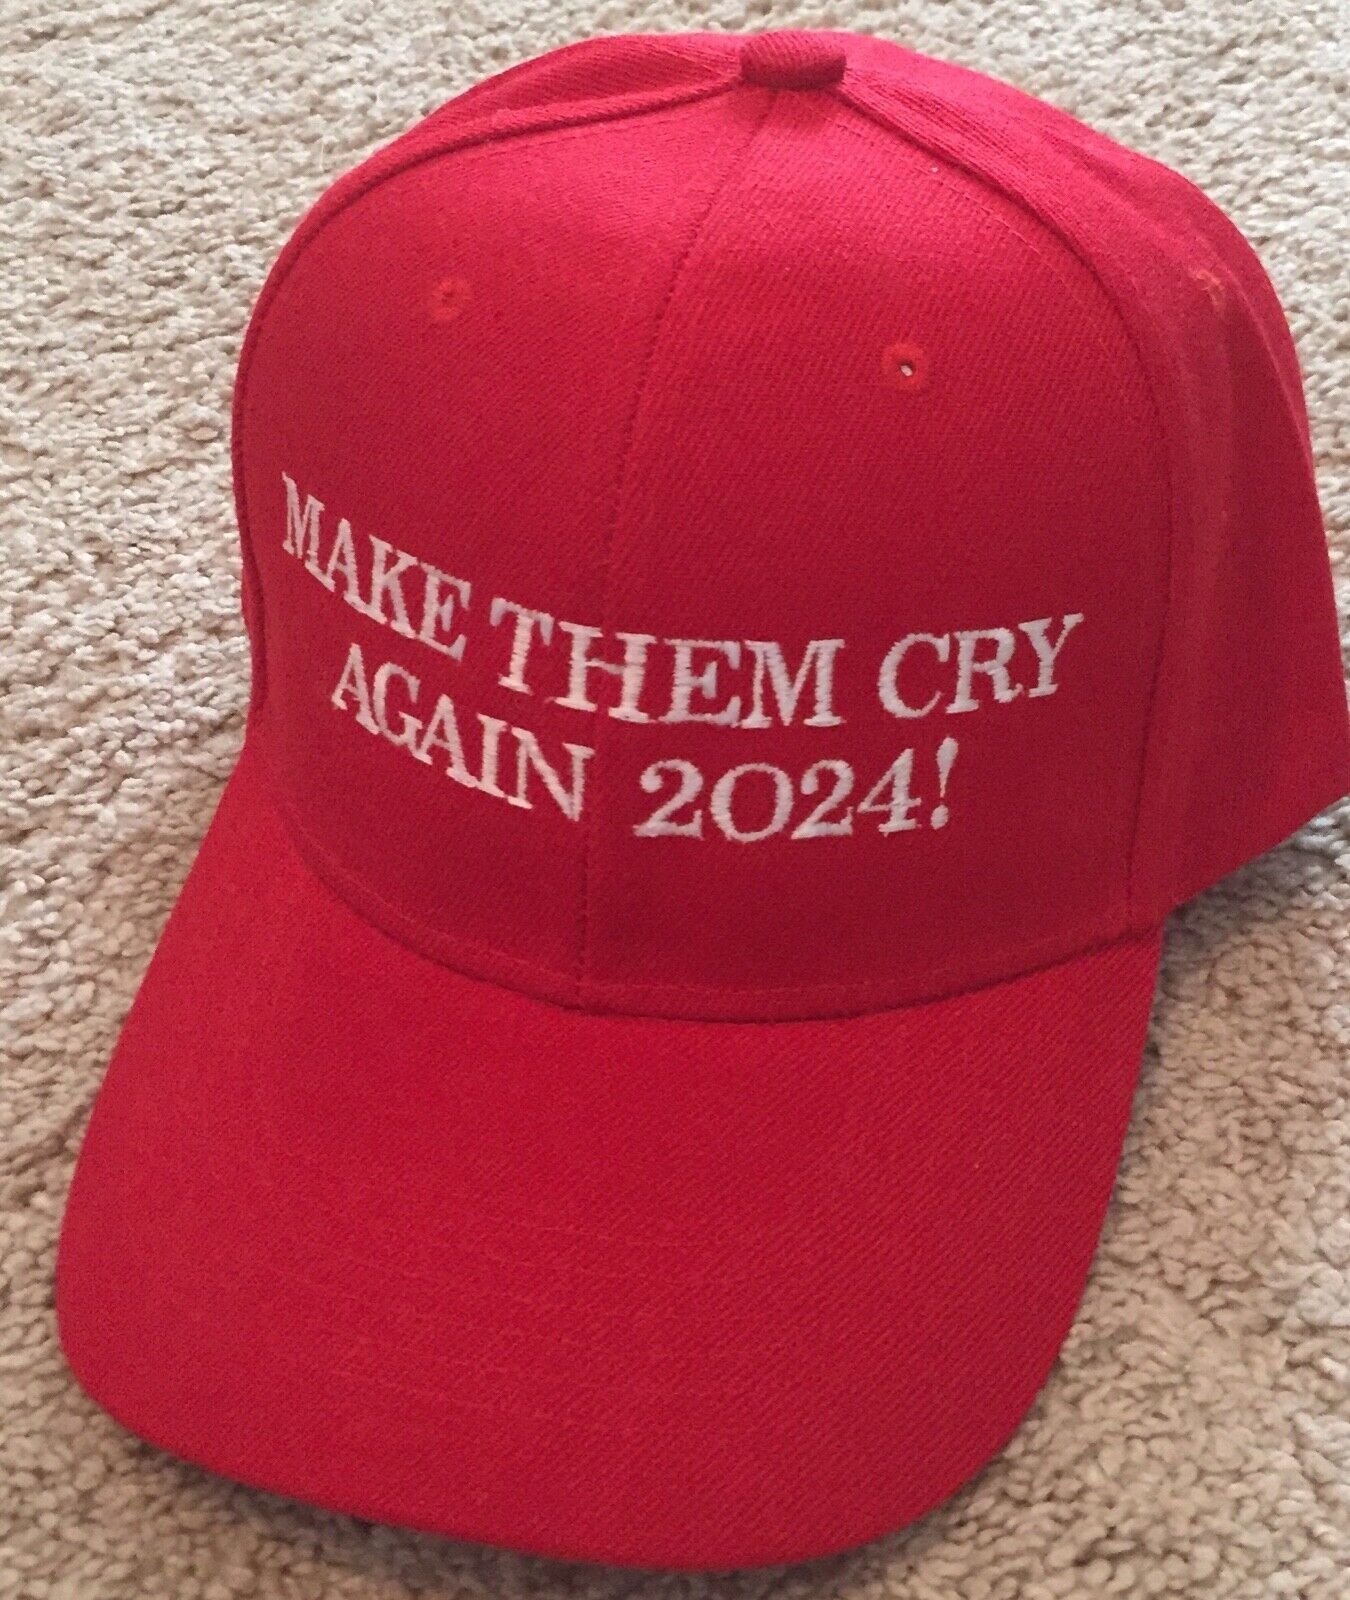 MAKE AMERICA GREAT AGAIN 2024 Hat TRUMP Inspired MAKE THEM CRY AGAIN 2024 Cap